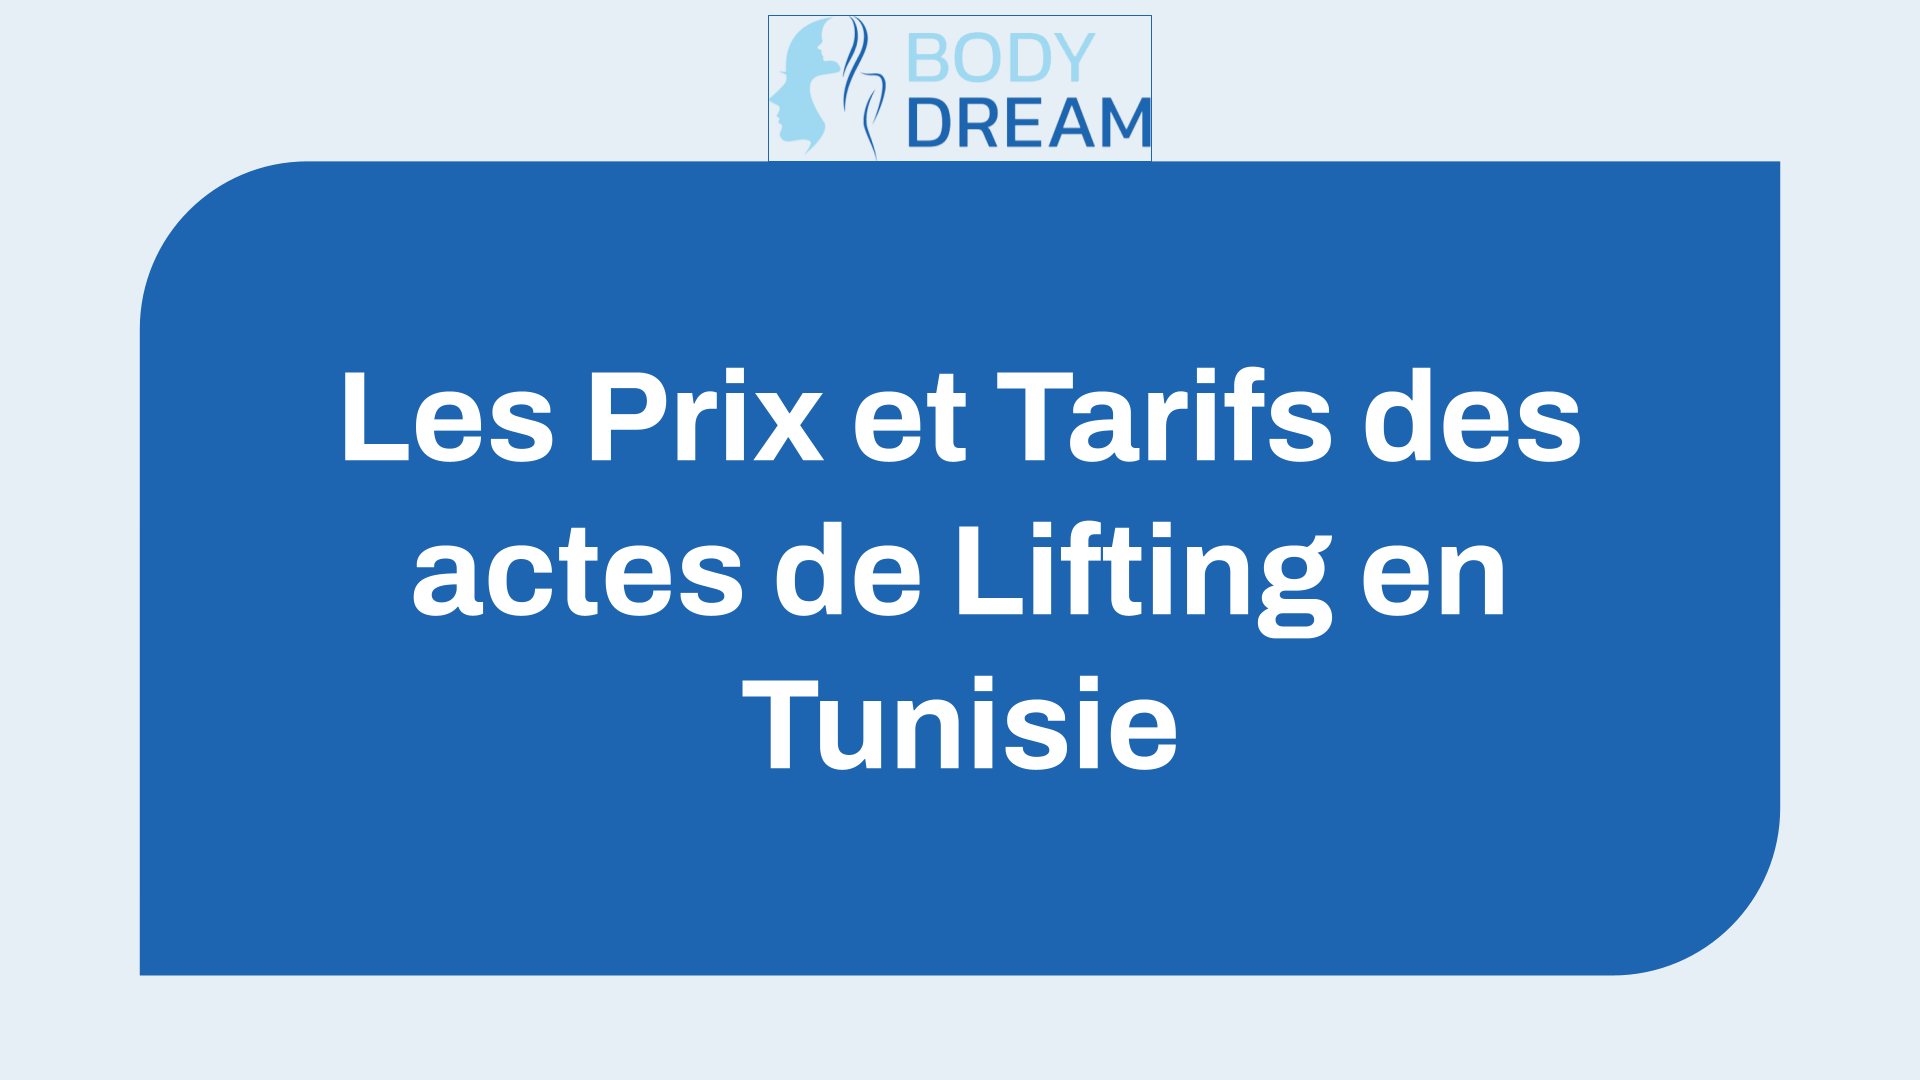 Les Prix et Tarifs des actes de Lifting en Tunisie